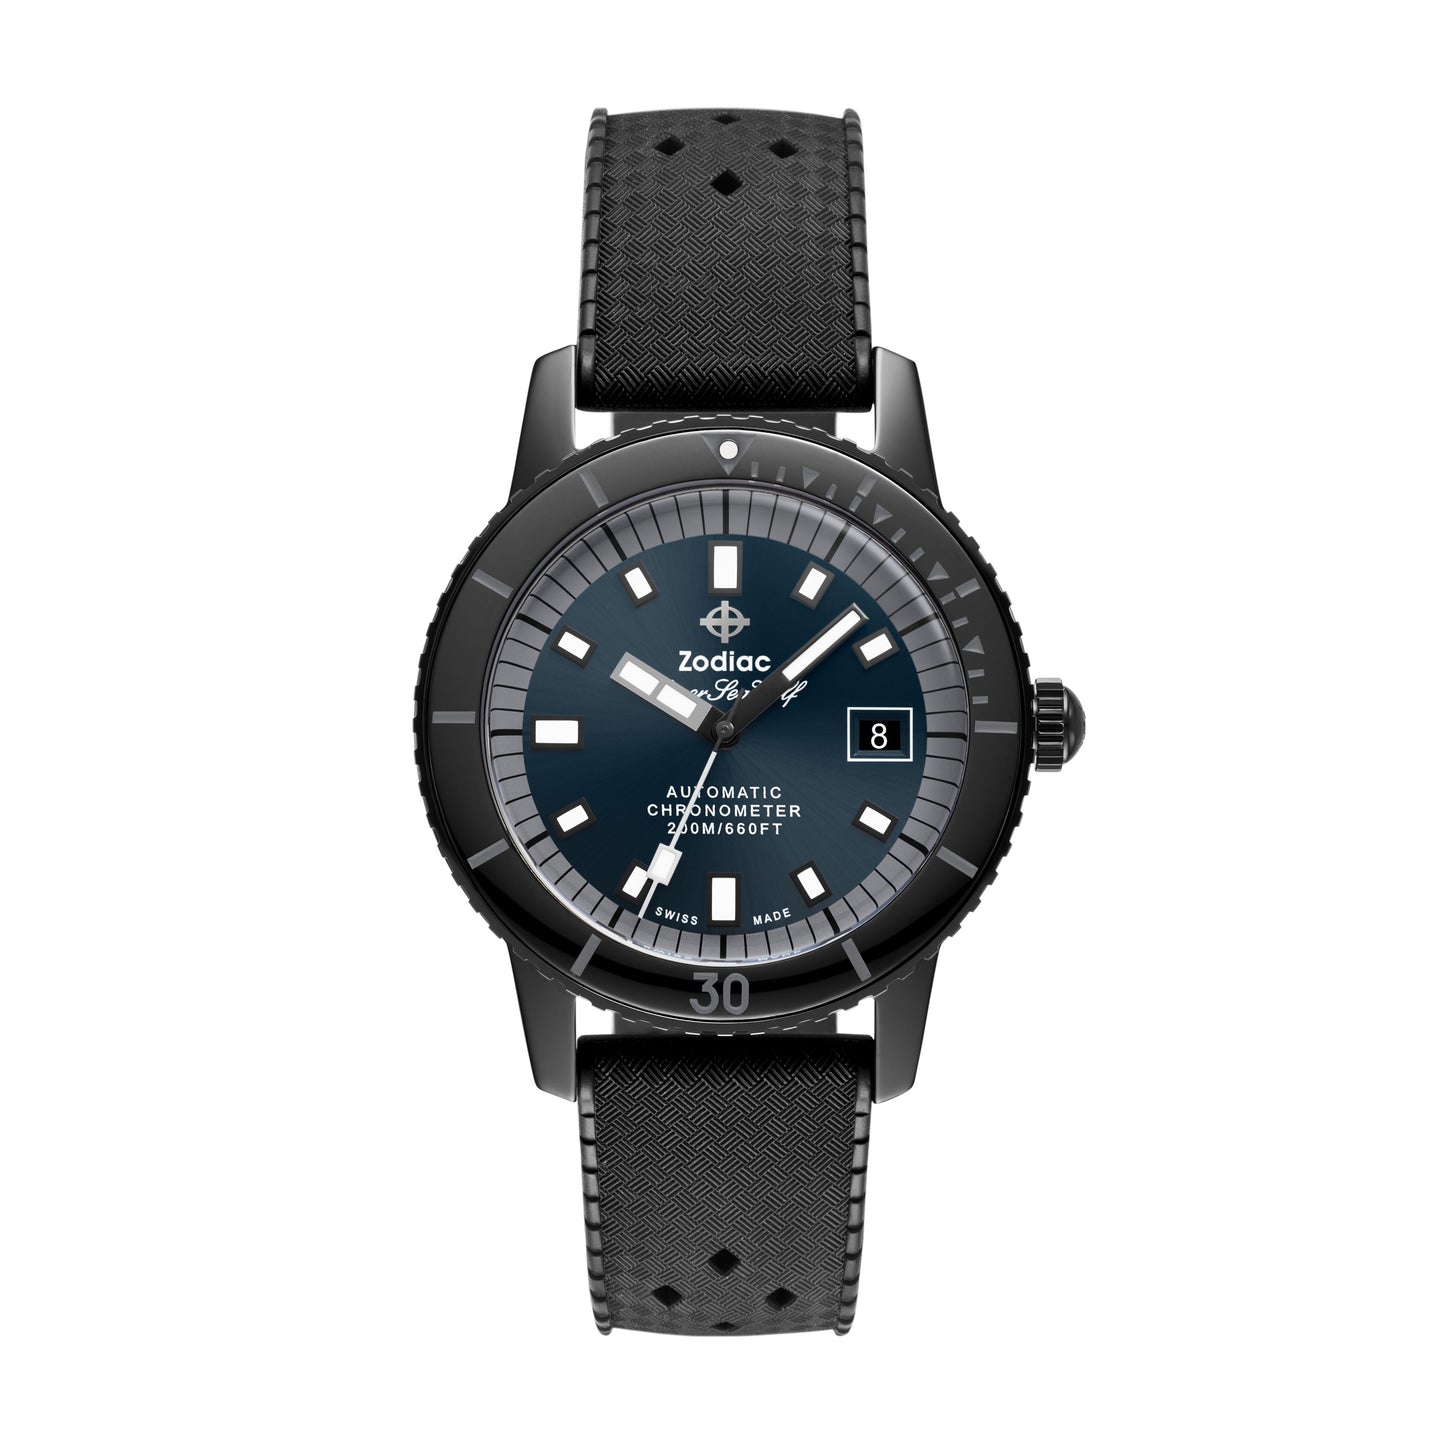 Zodiac - Z09595 - Super Sea Wolf STP 1-11 Swiss Automatic Three-Hand Date Black Rubber Watch